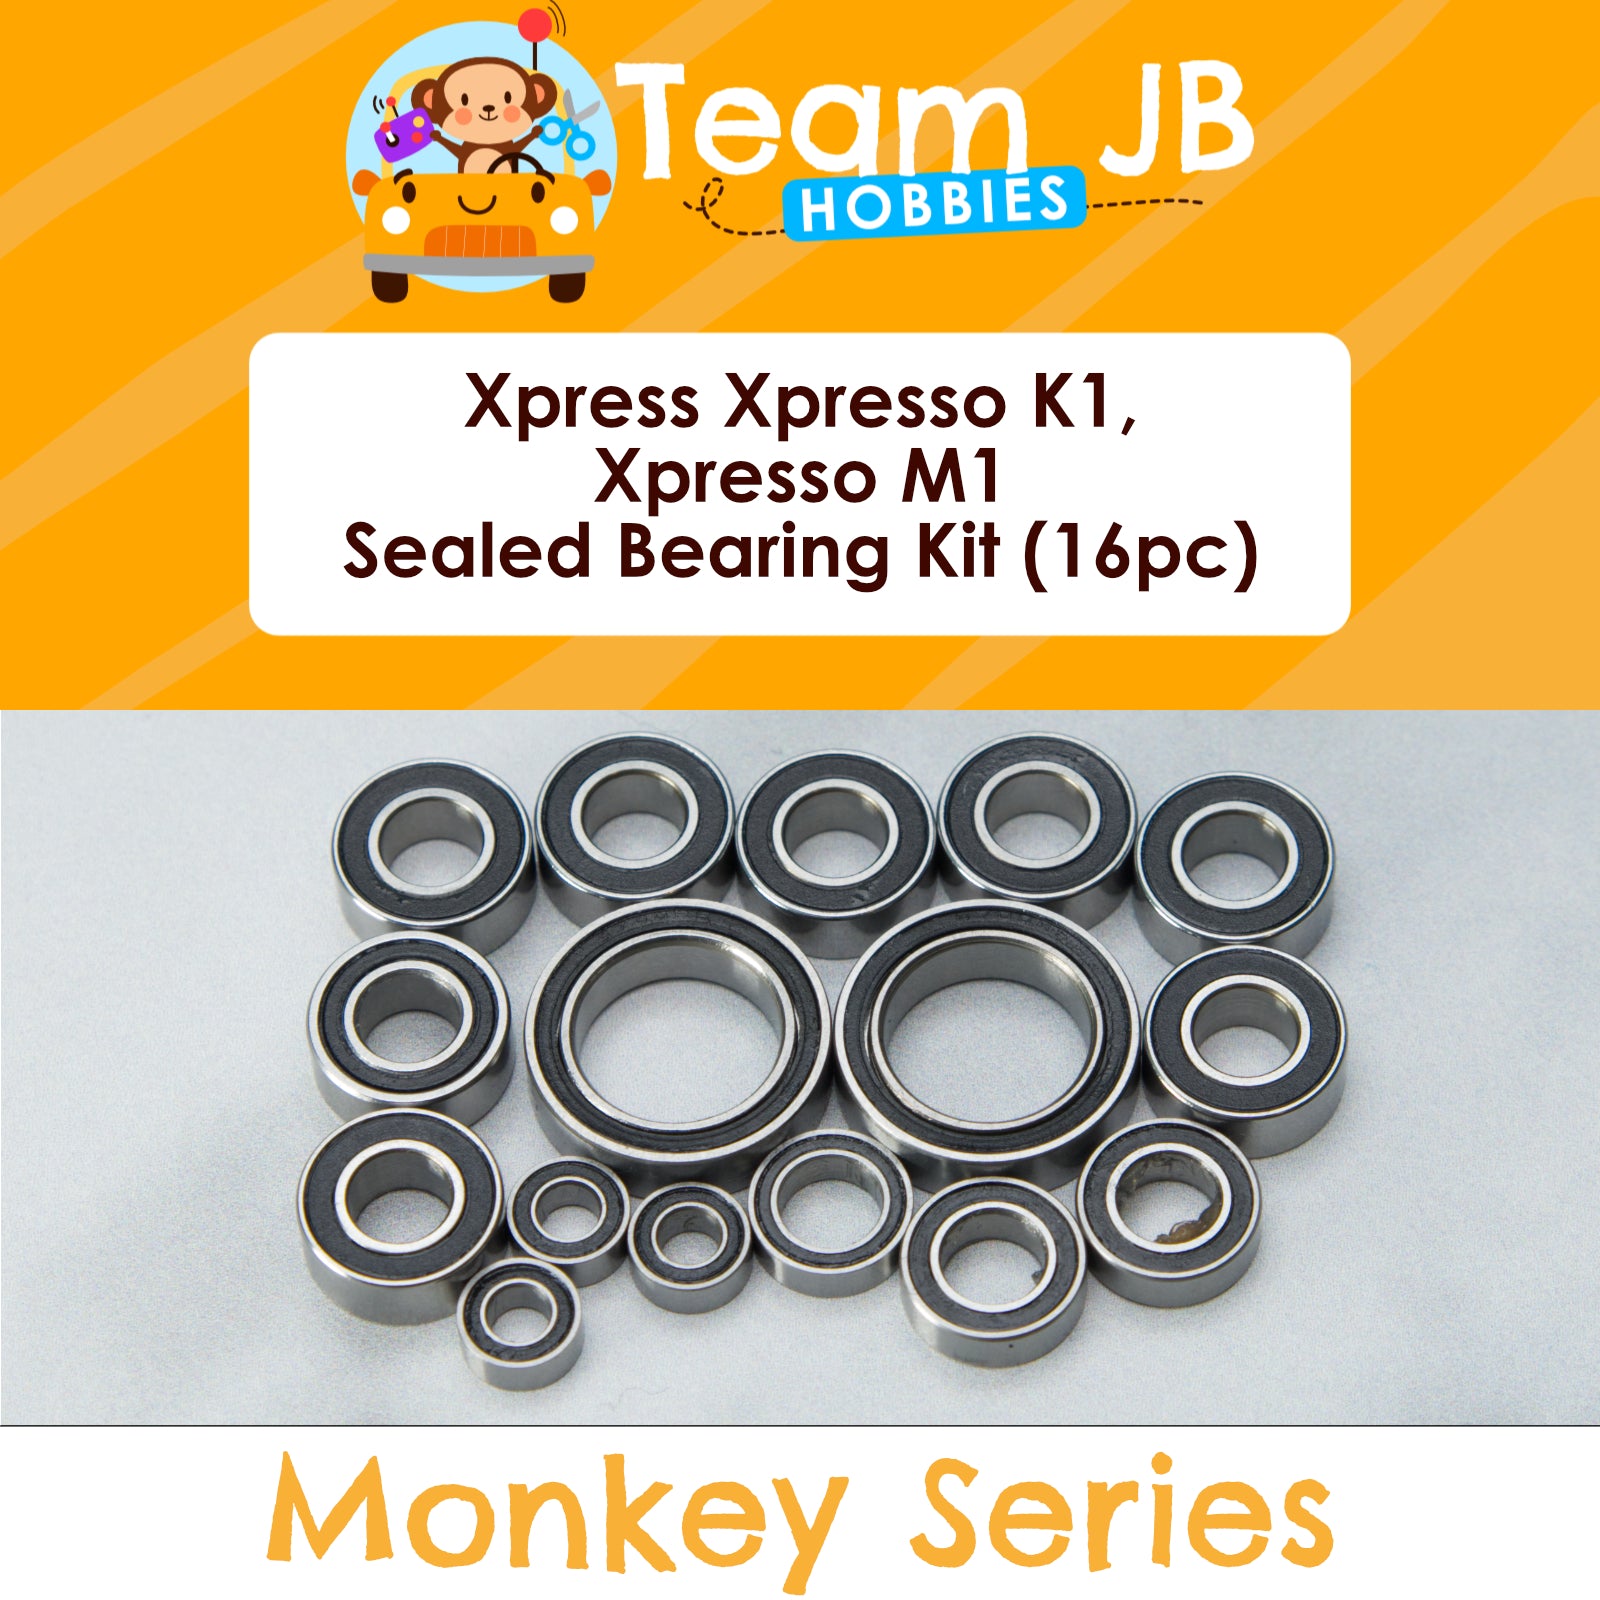 Xpress Xpresso K1, Xpresso M1 - Sealed Bearing Kit